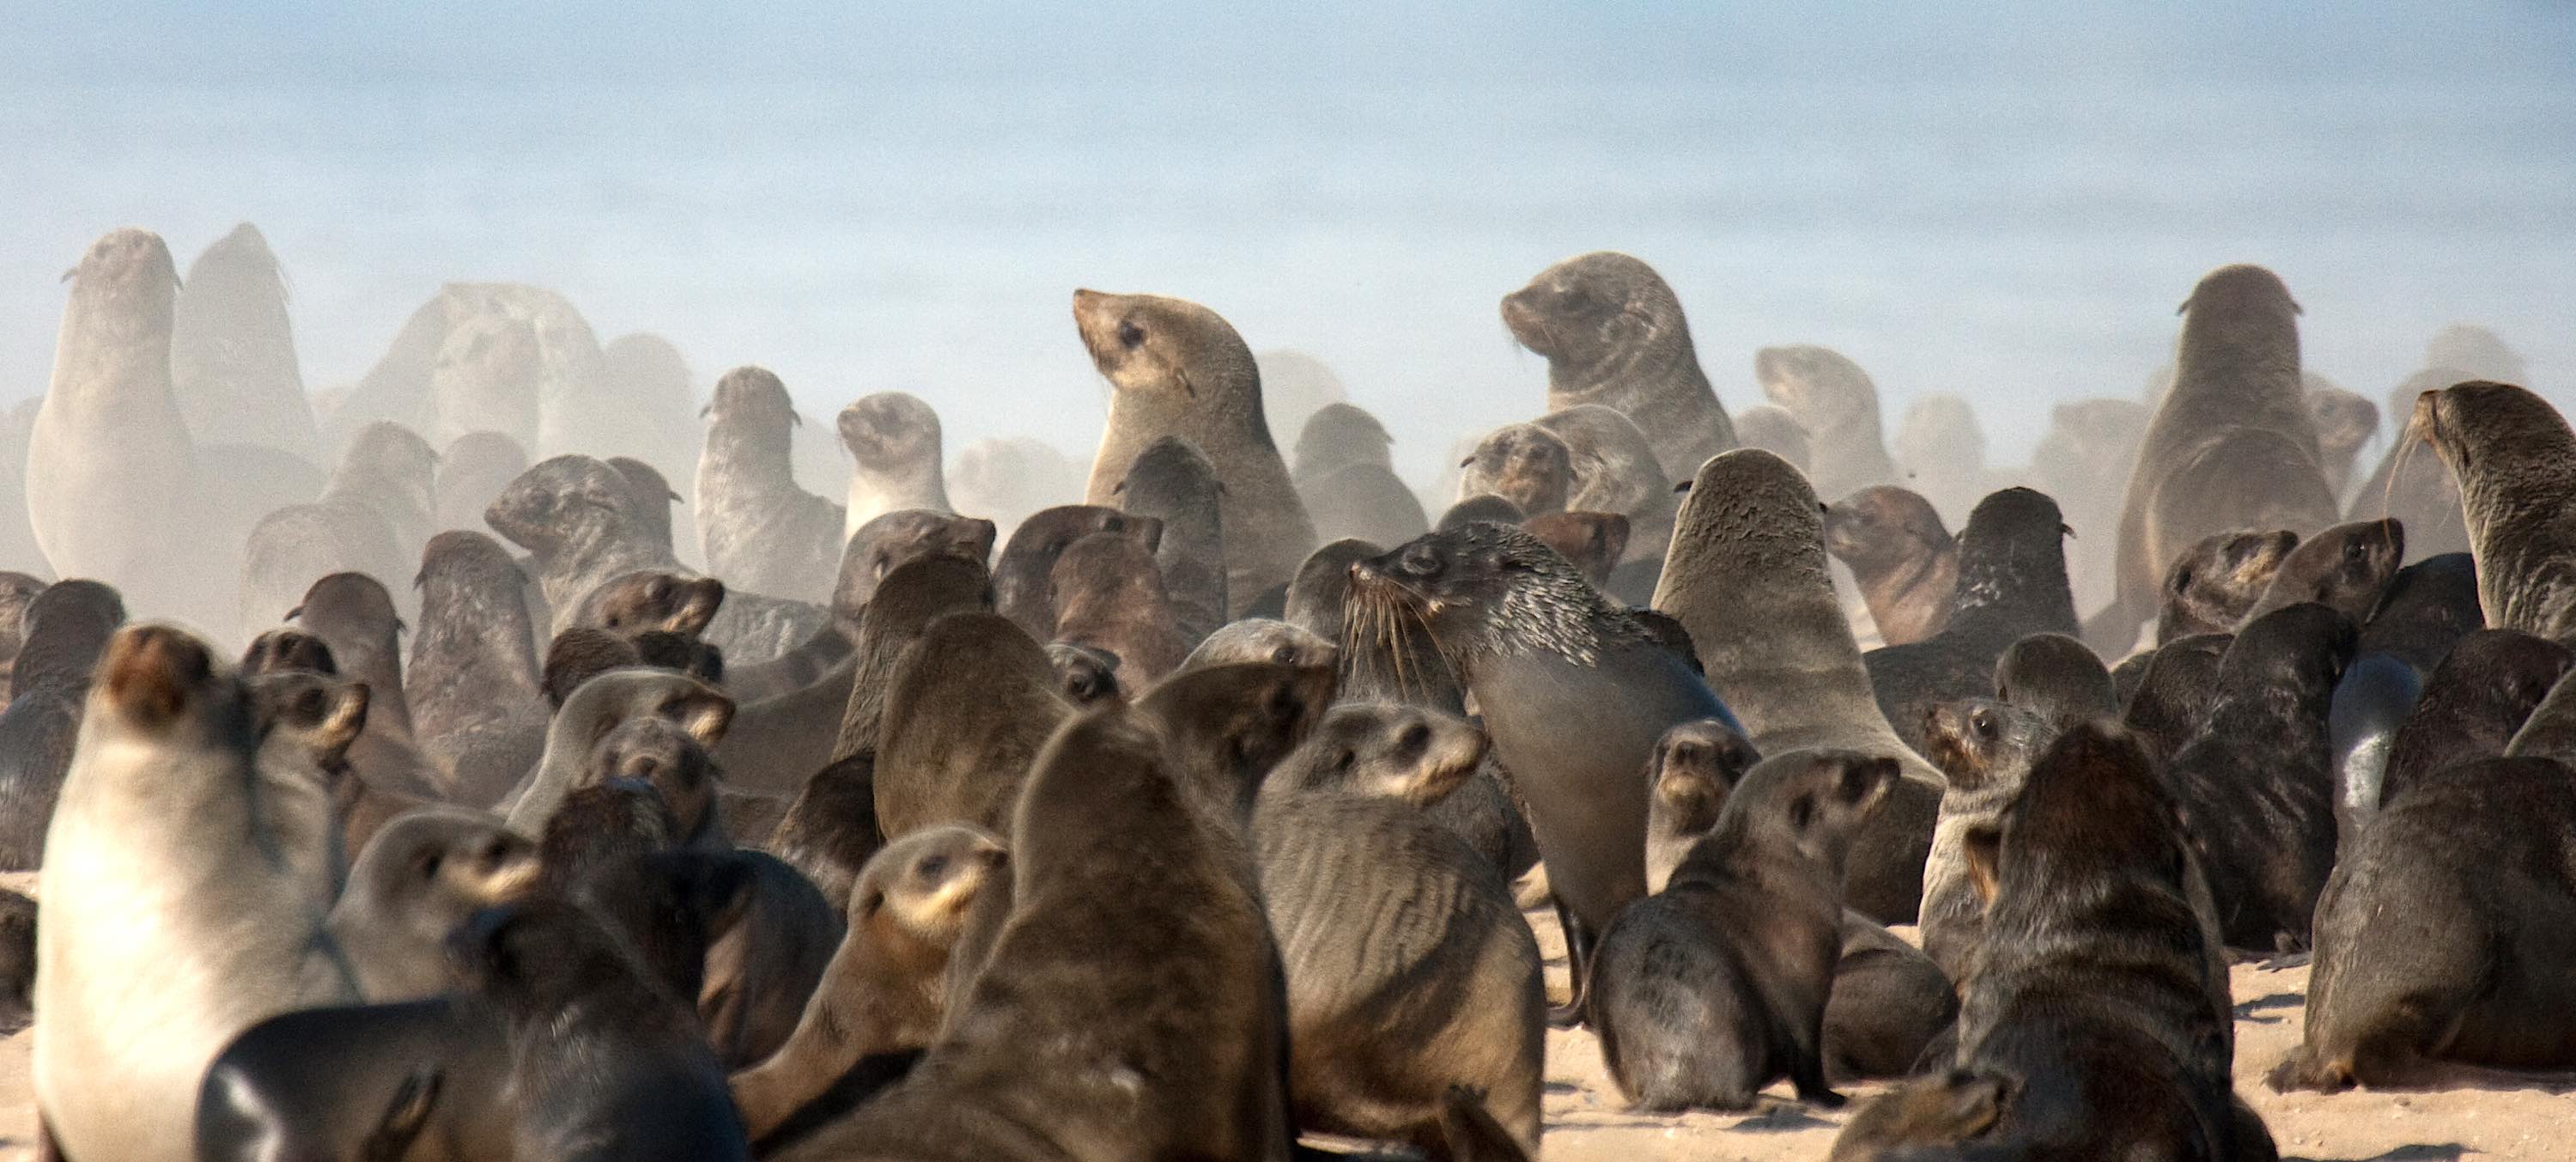 A dense crowd of seals.